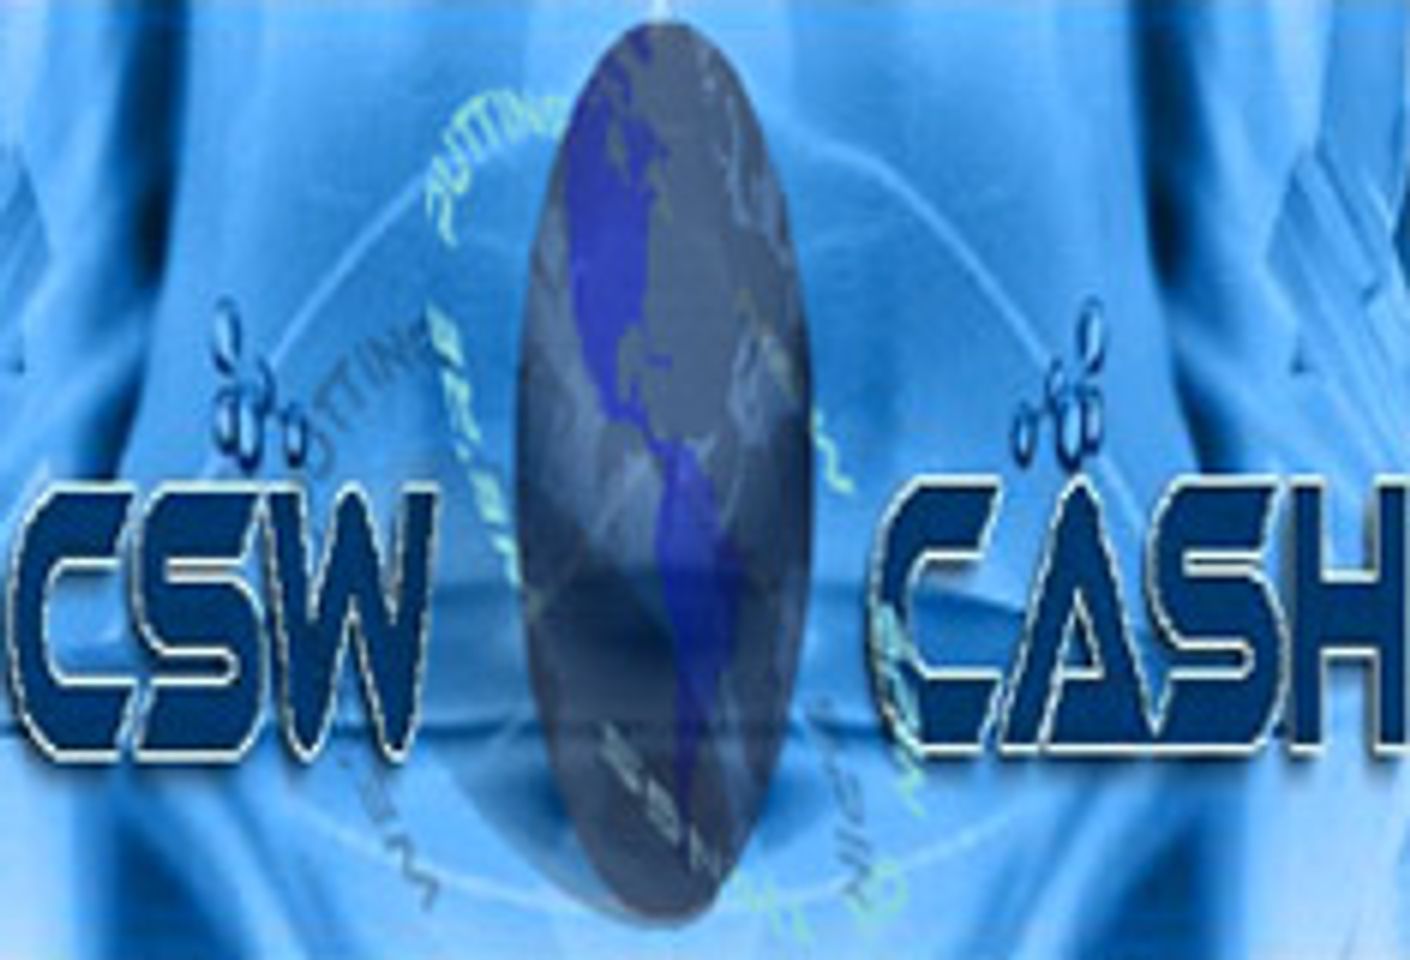 CSWCash.com Launches Genesis Program